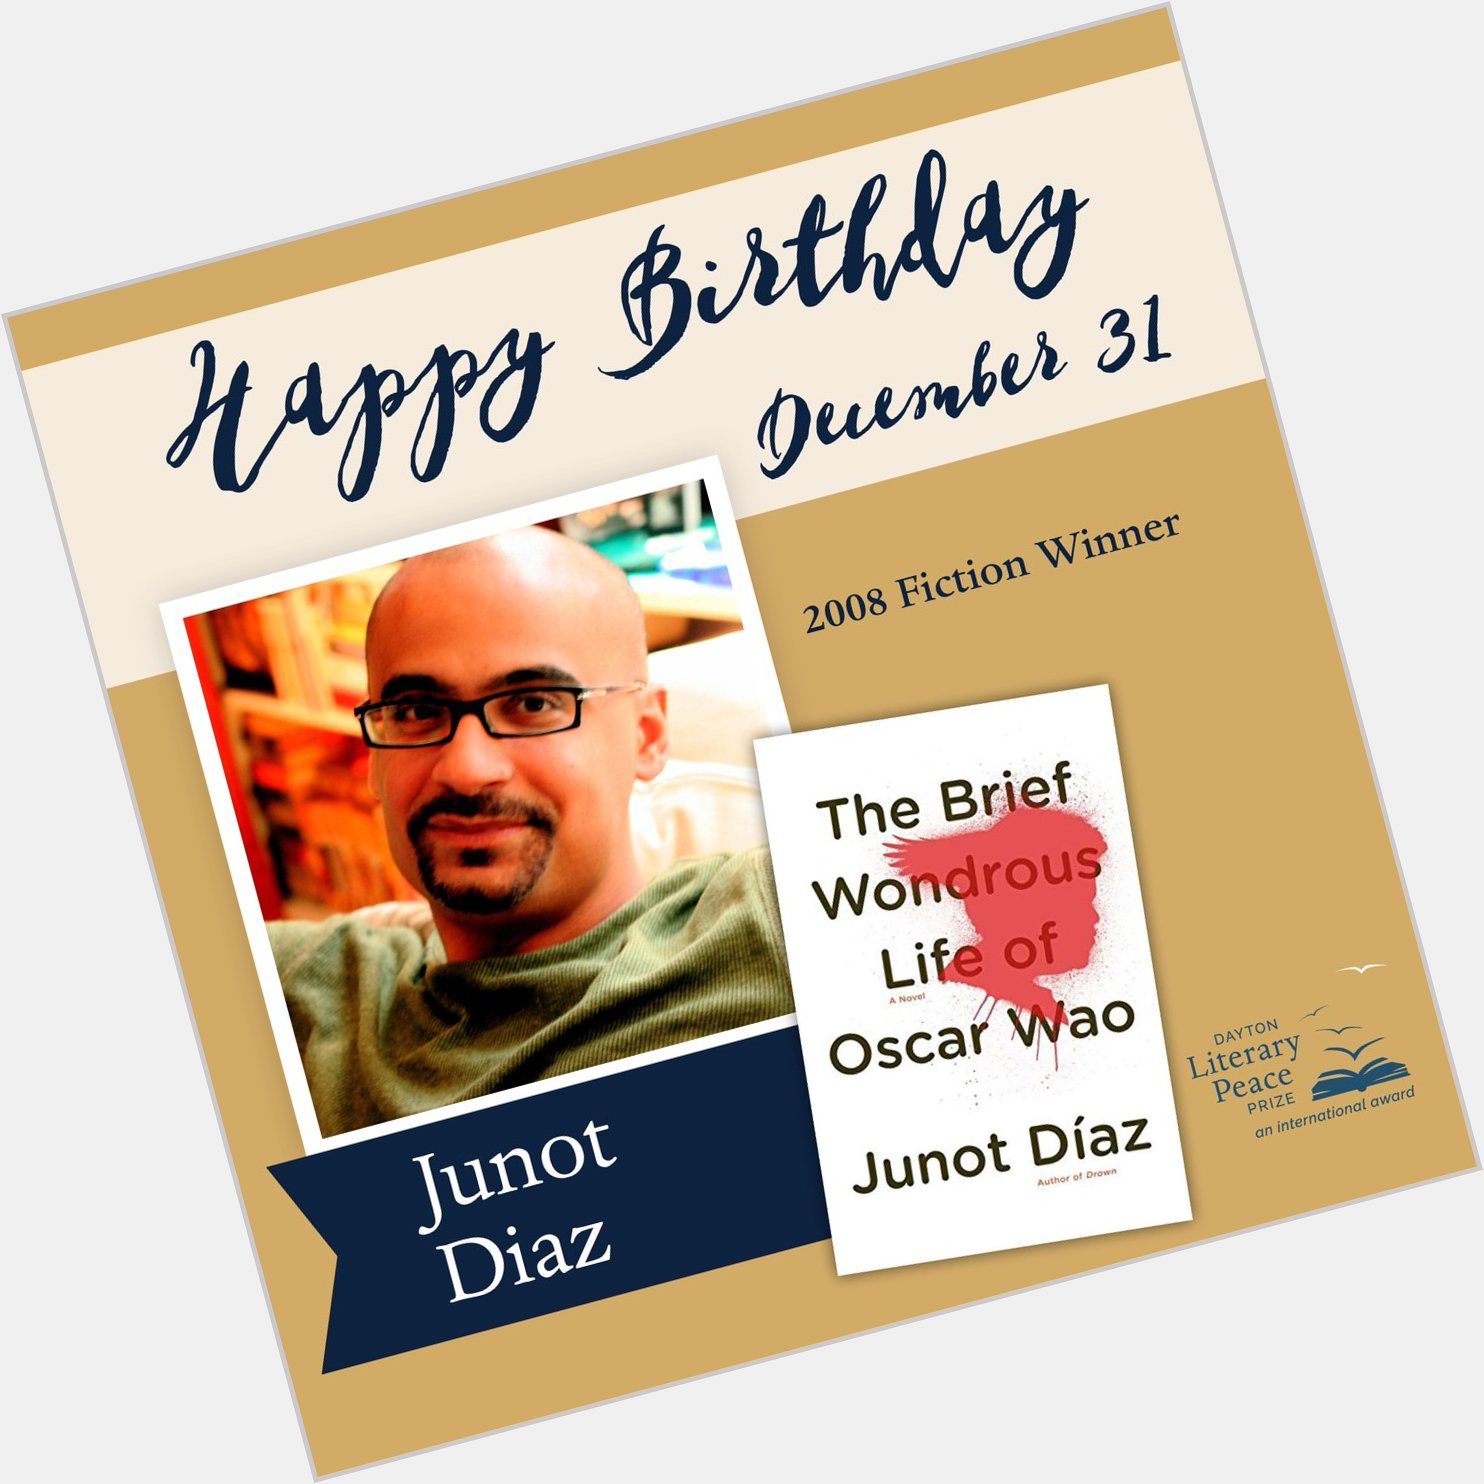 Happy Birthday to the Dayton Literary Peace Prize 2008 Fiction Winner Junot Diaz! 